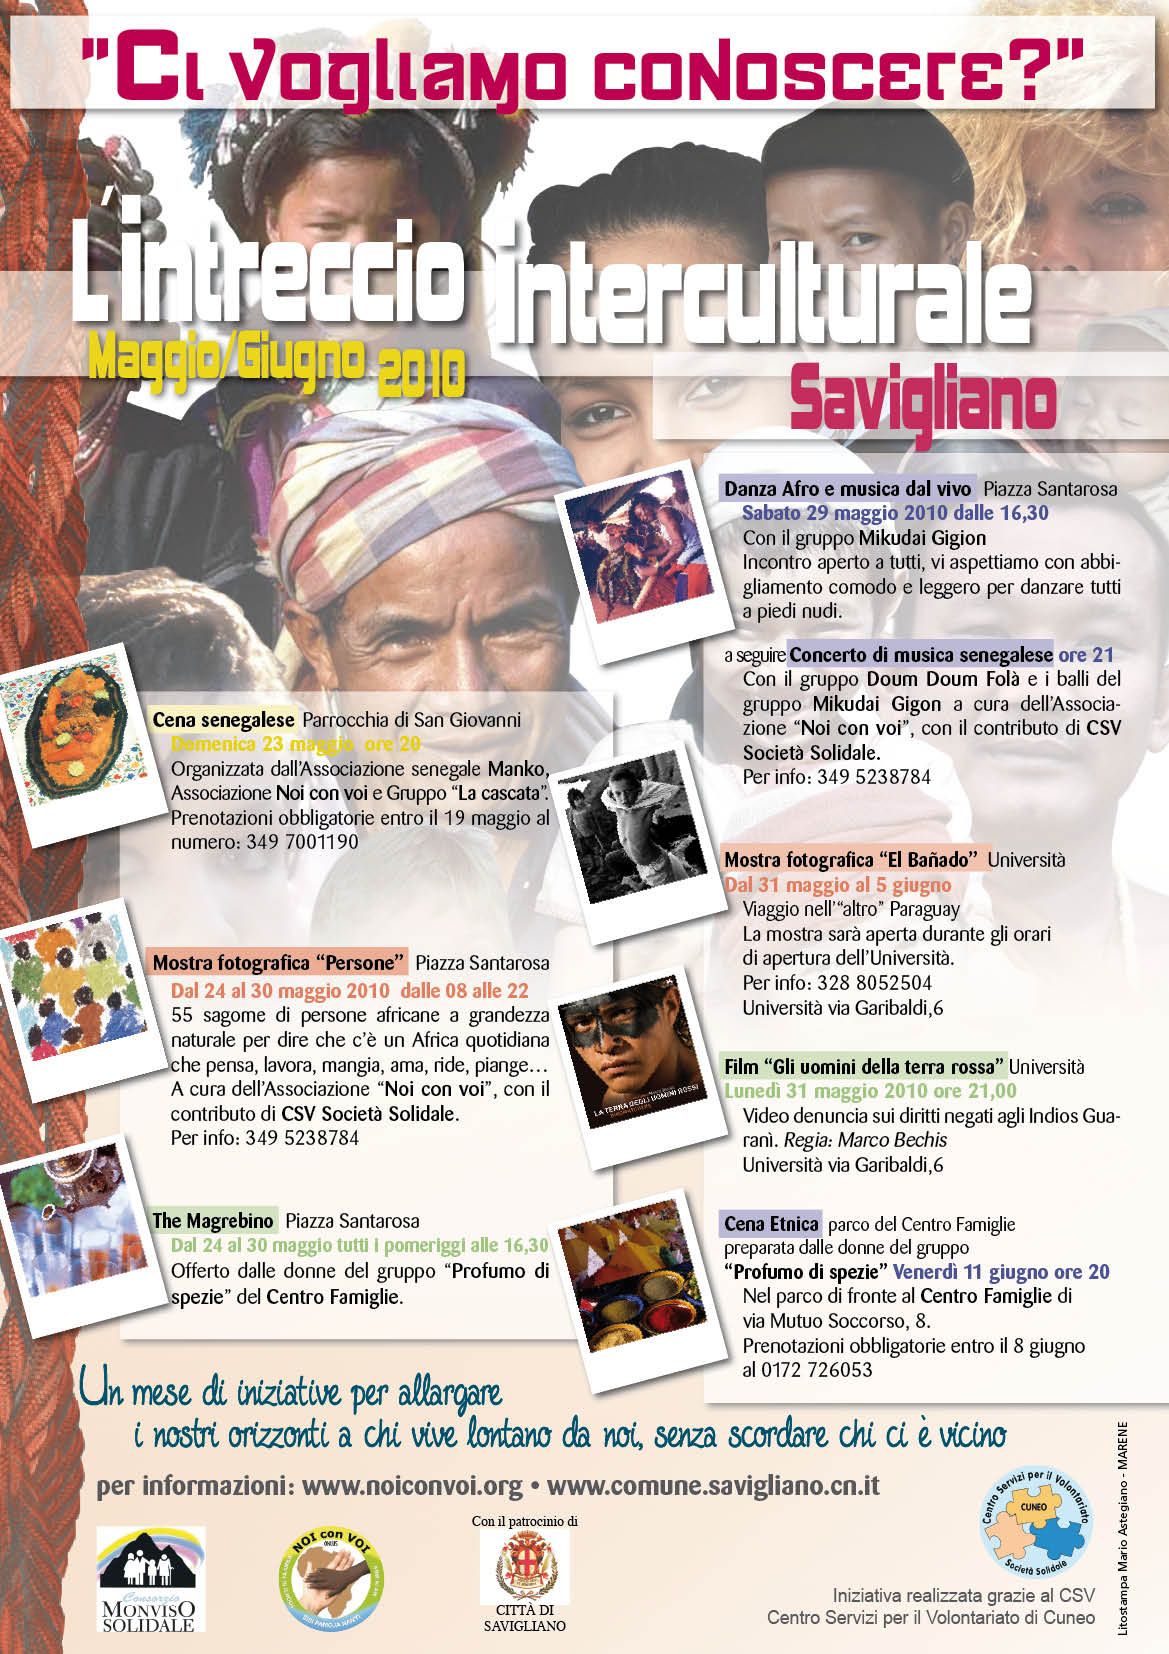 2010: Intreccio Interculturale